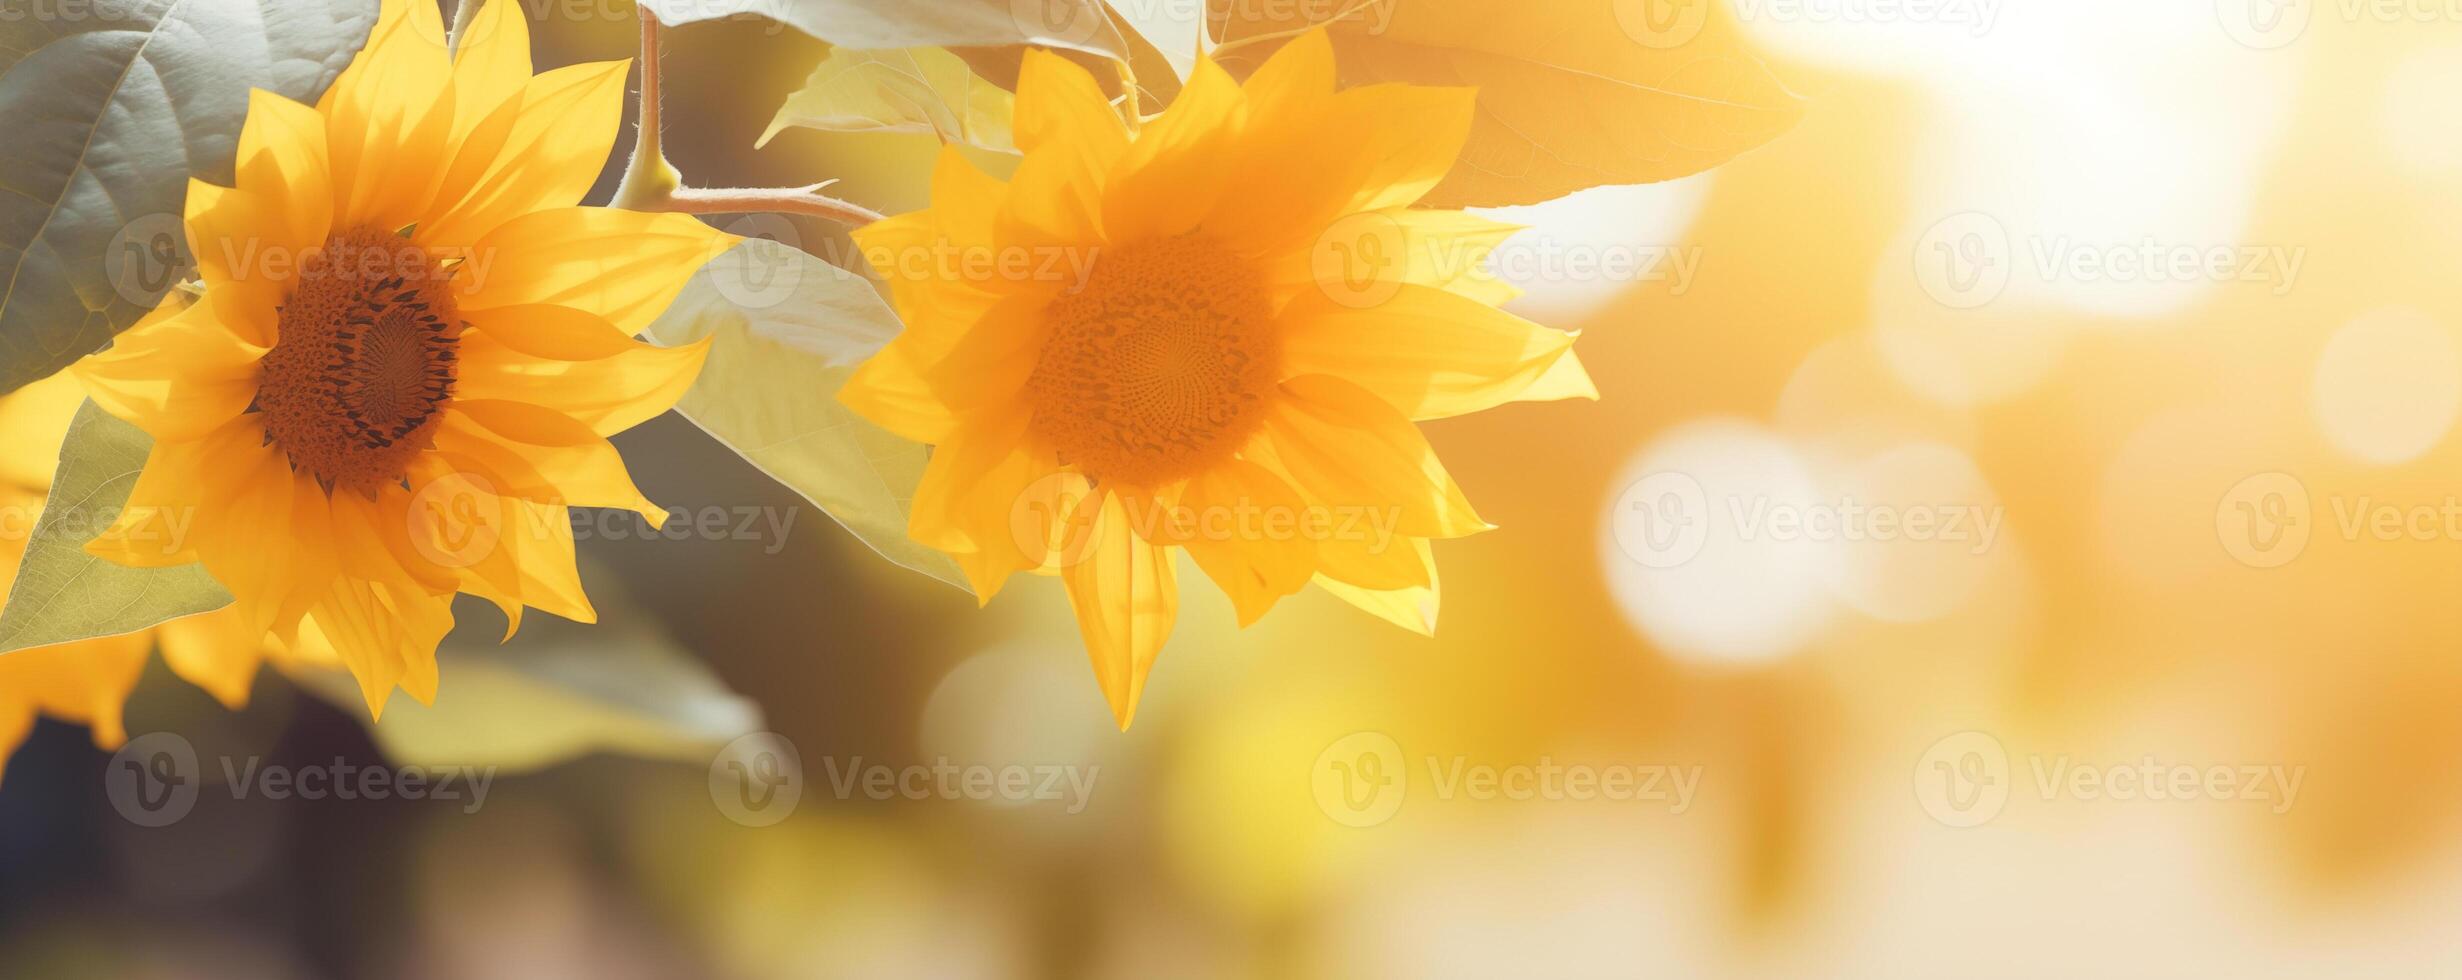 Bright sunflower banner with golden petals in sunlit summer glow photo